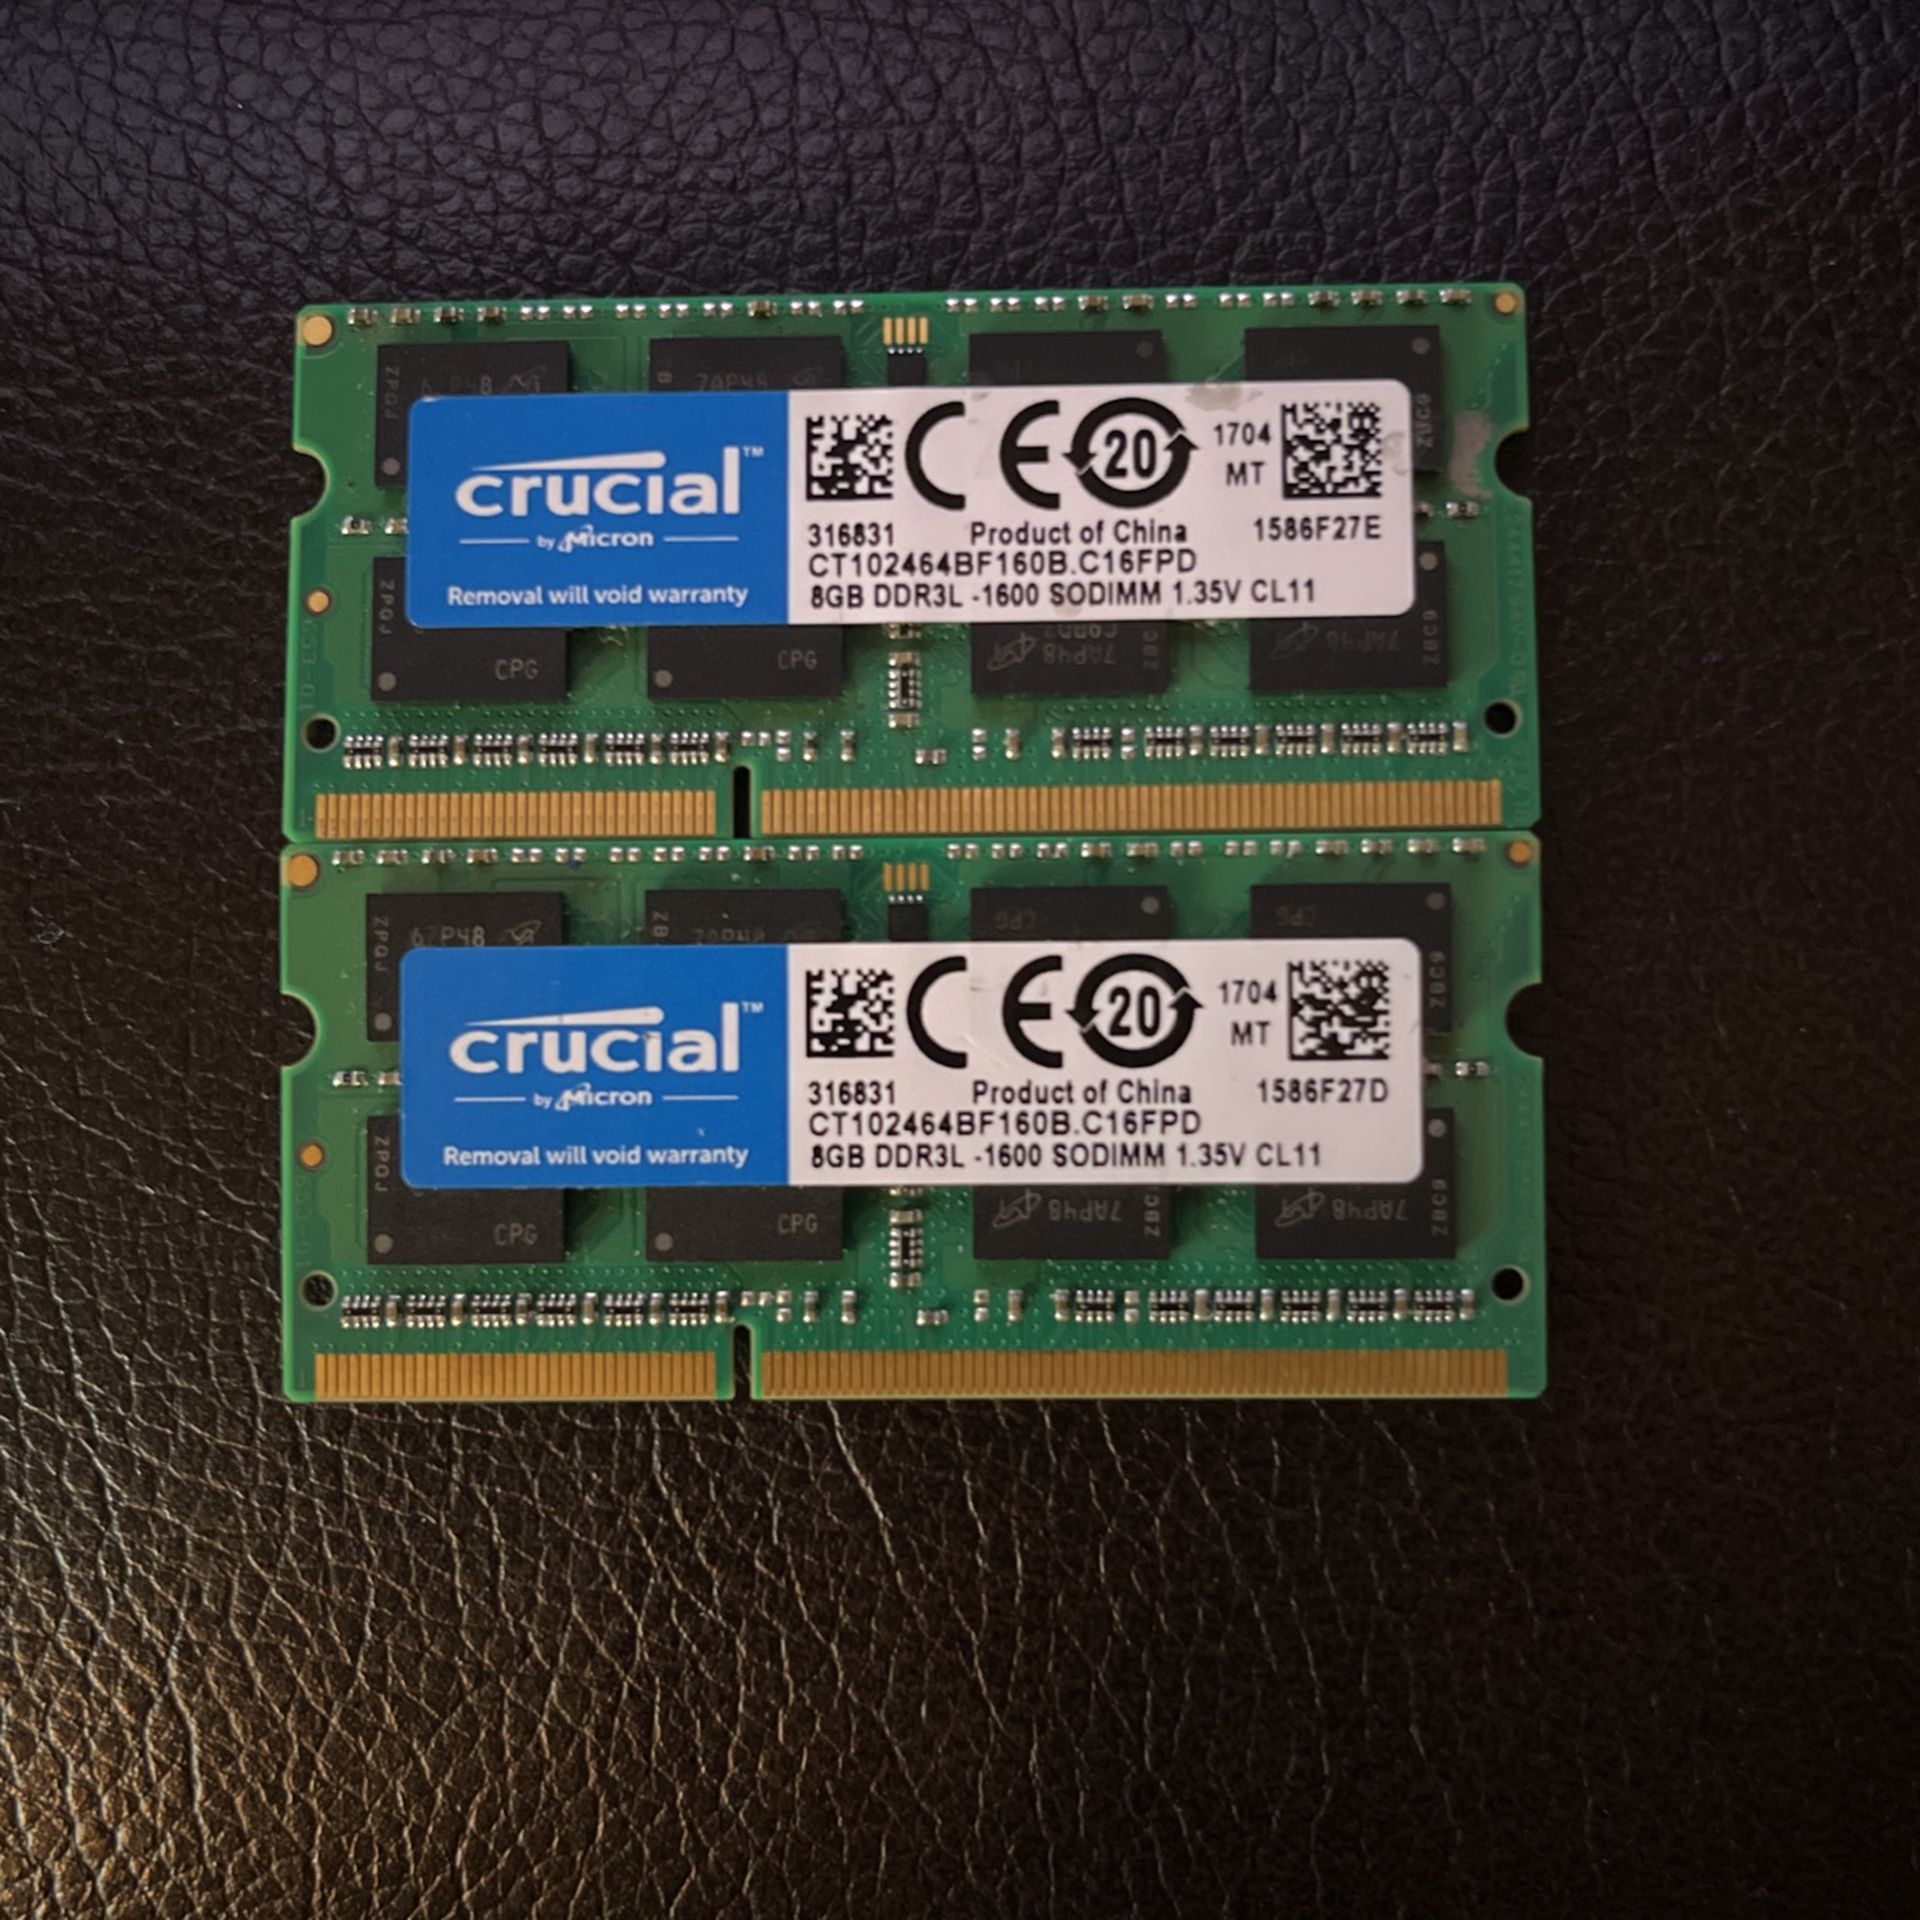 8GB DDR3L. 1600 SODIMM 1.35V CL11 (16GB) 